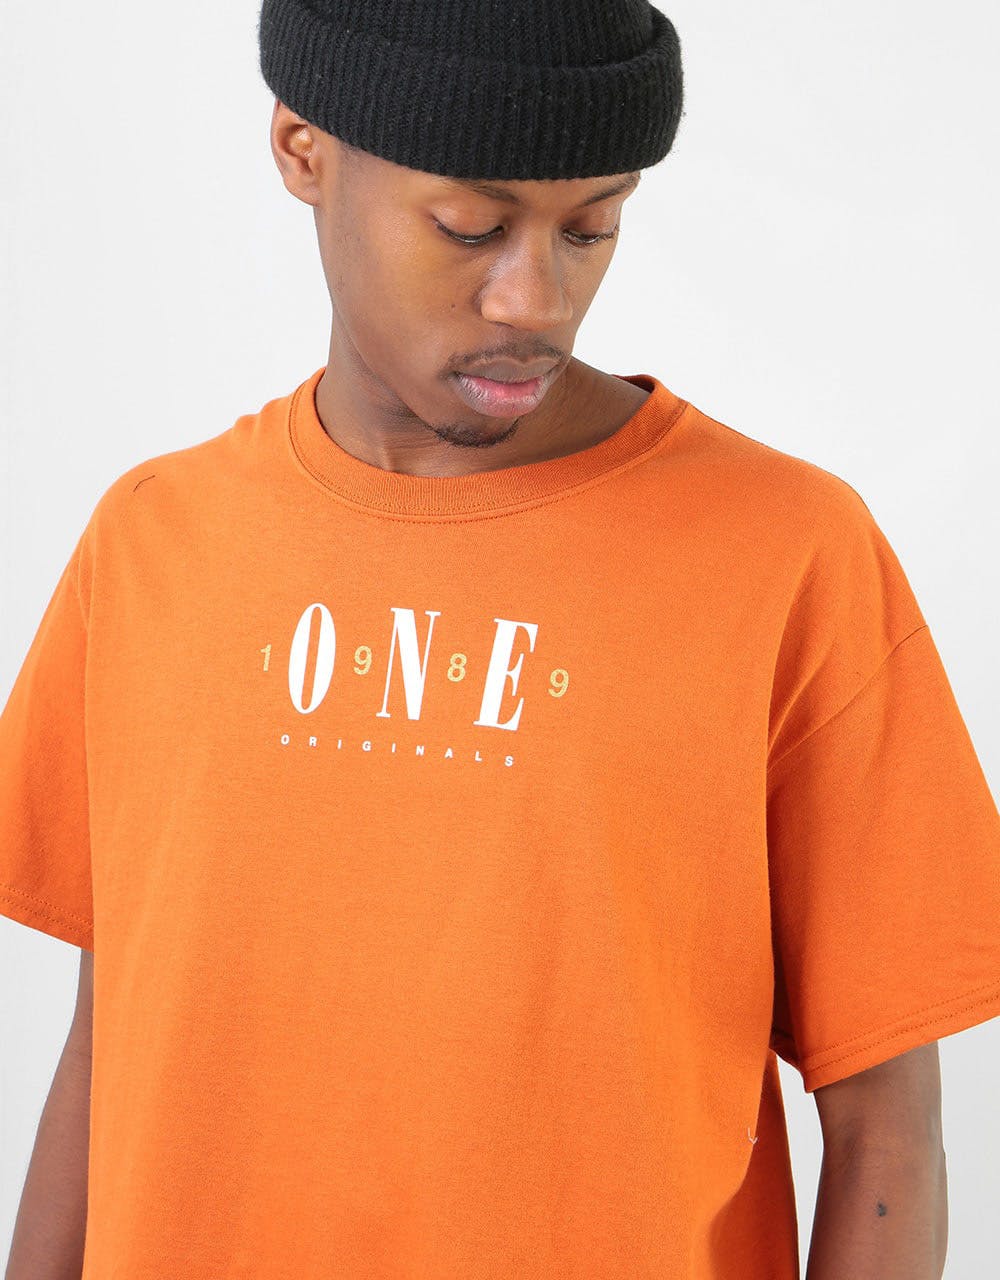 Route One Originals T-Shirt - Deep Orange